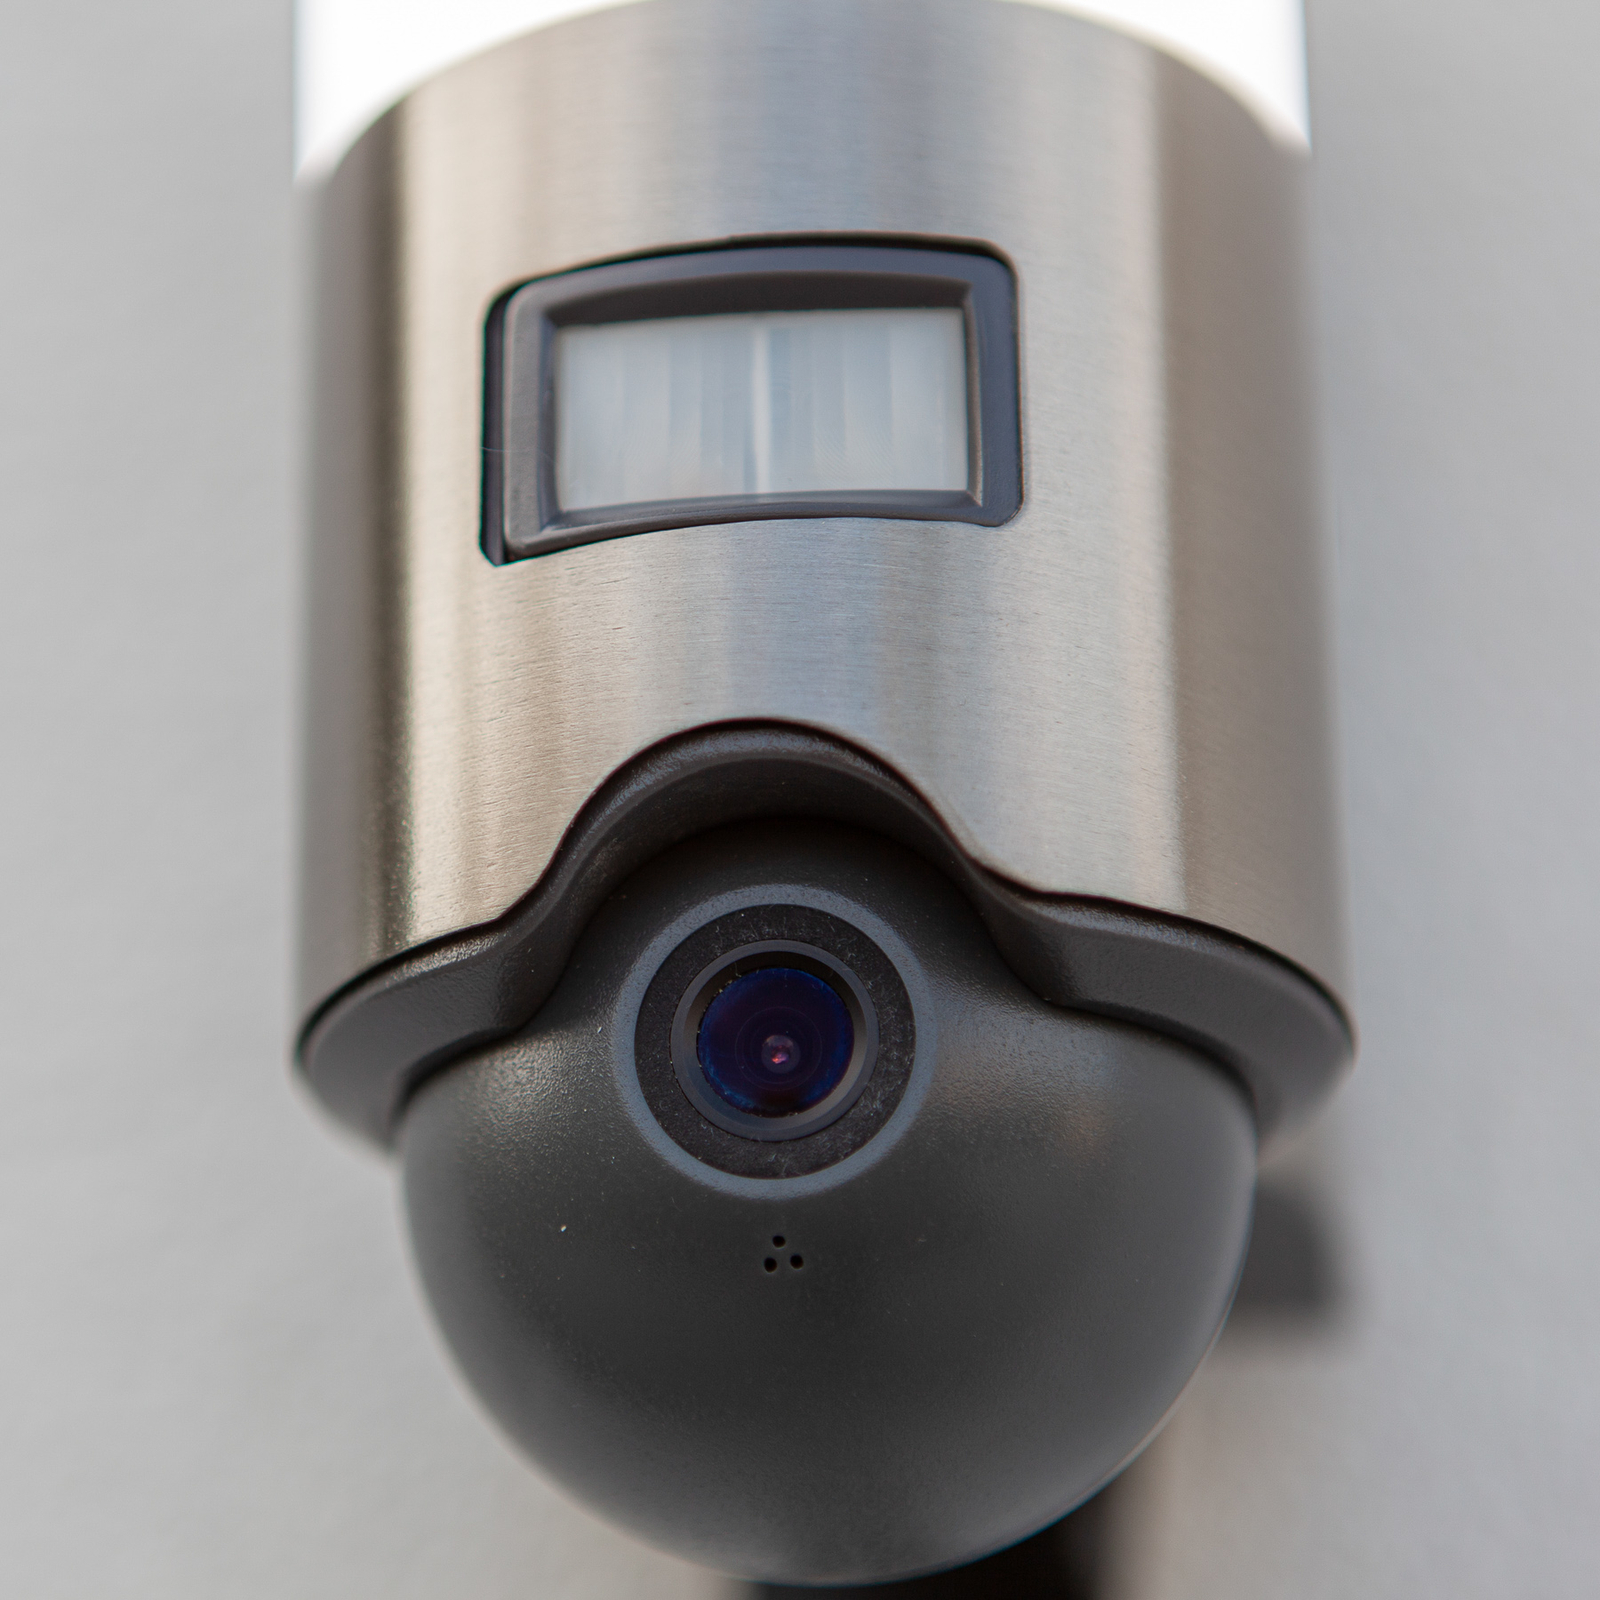 LED-Außenwandleuchte Elara grau Kamera